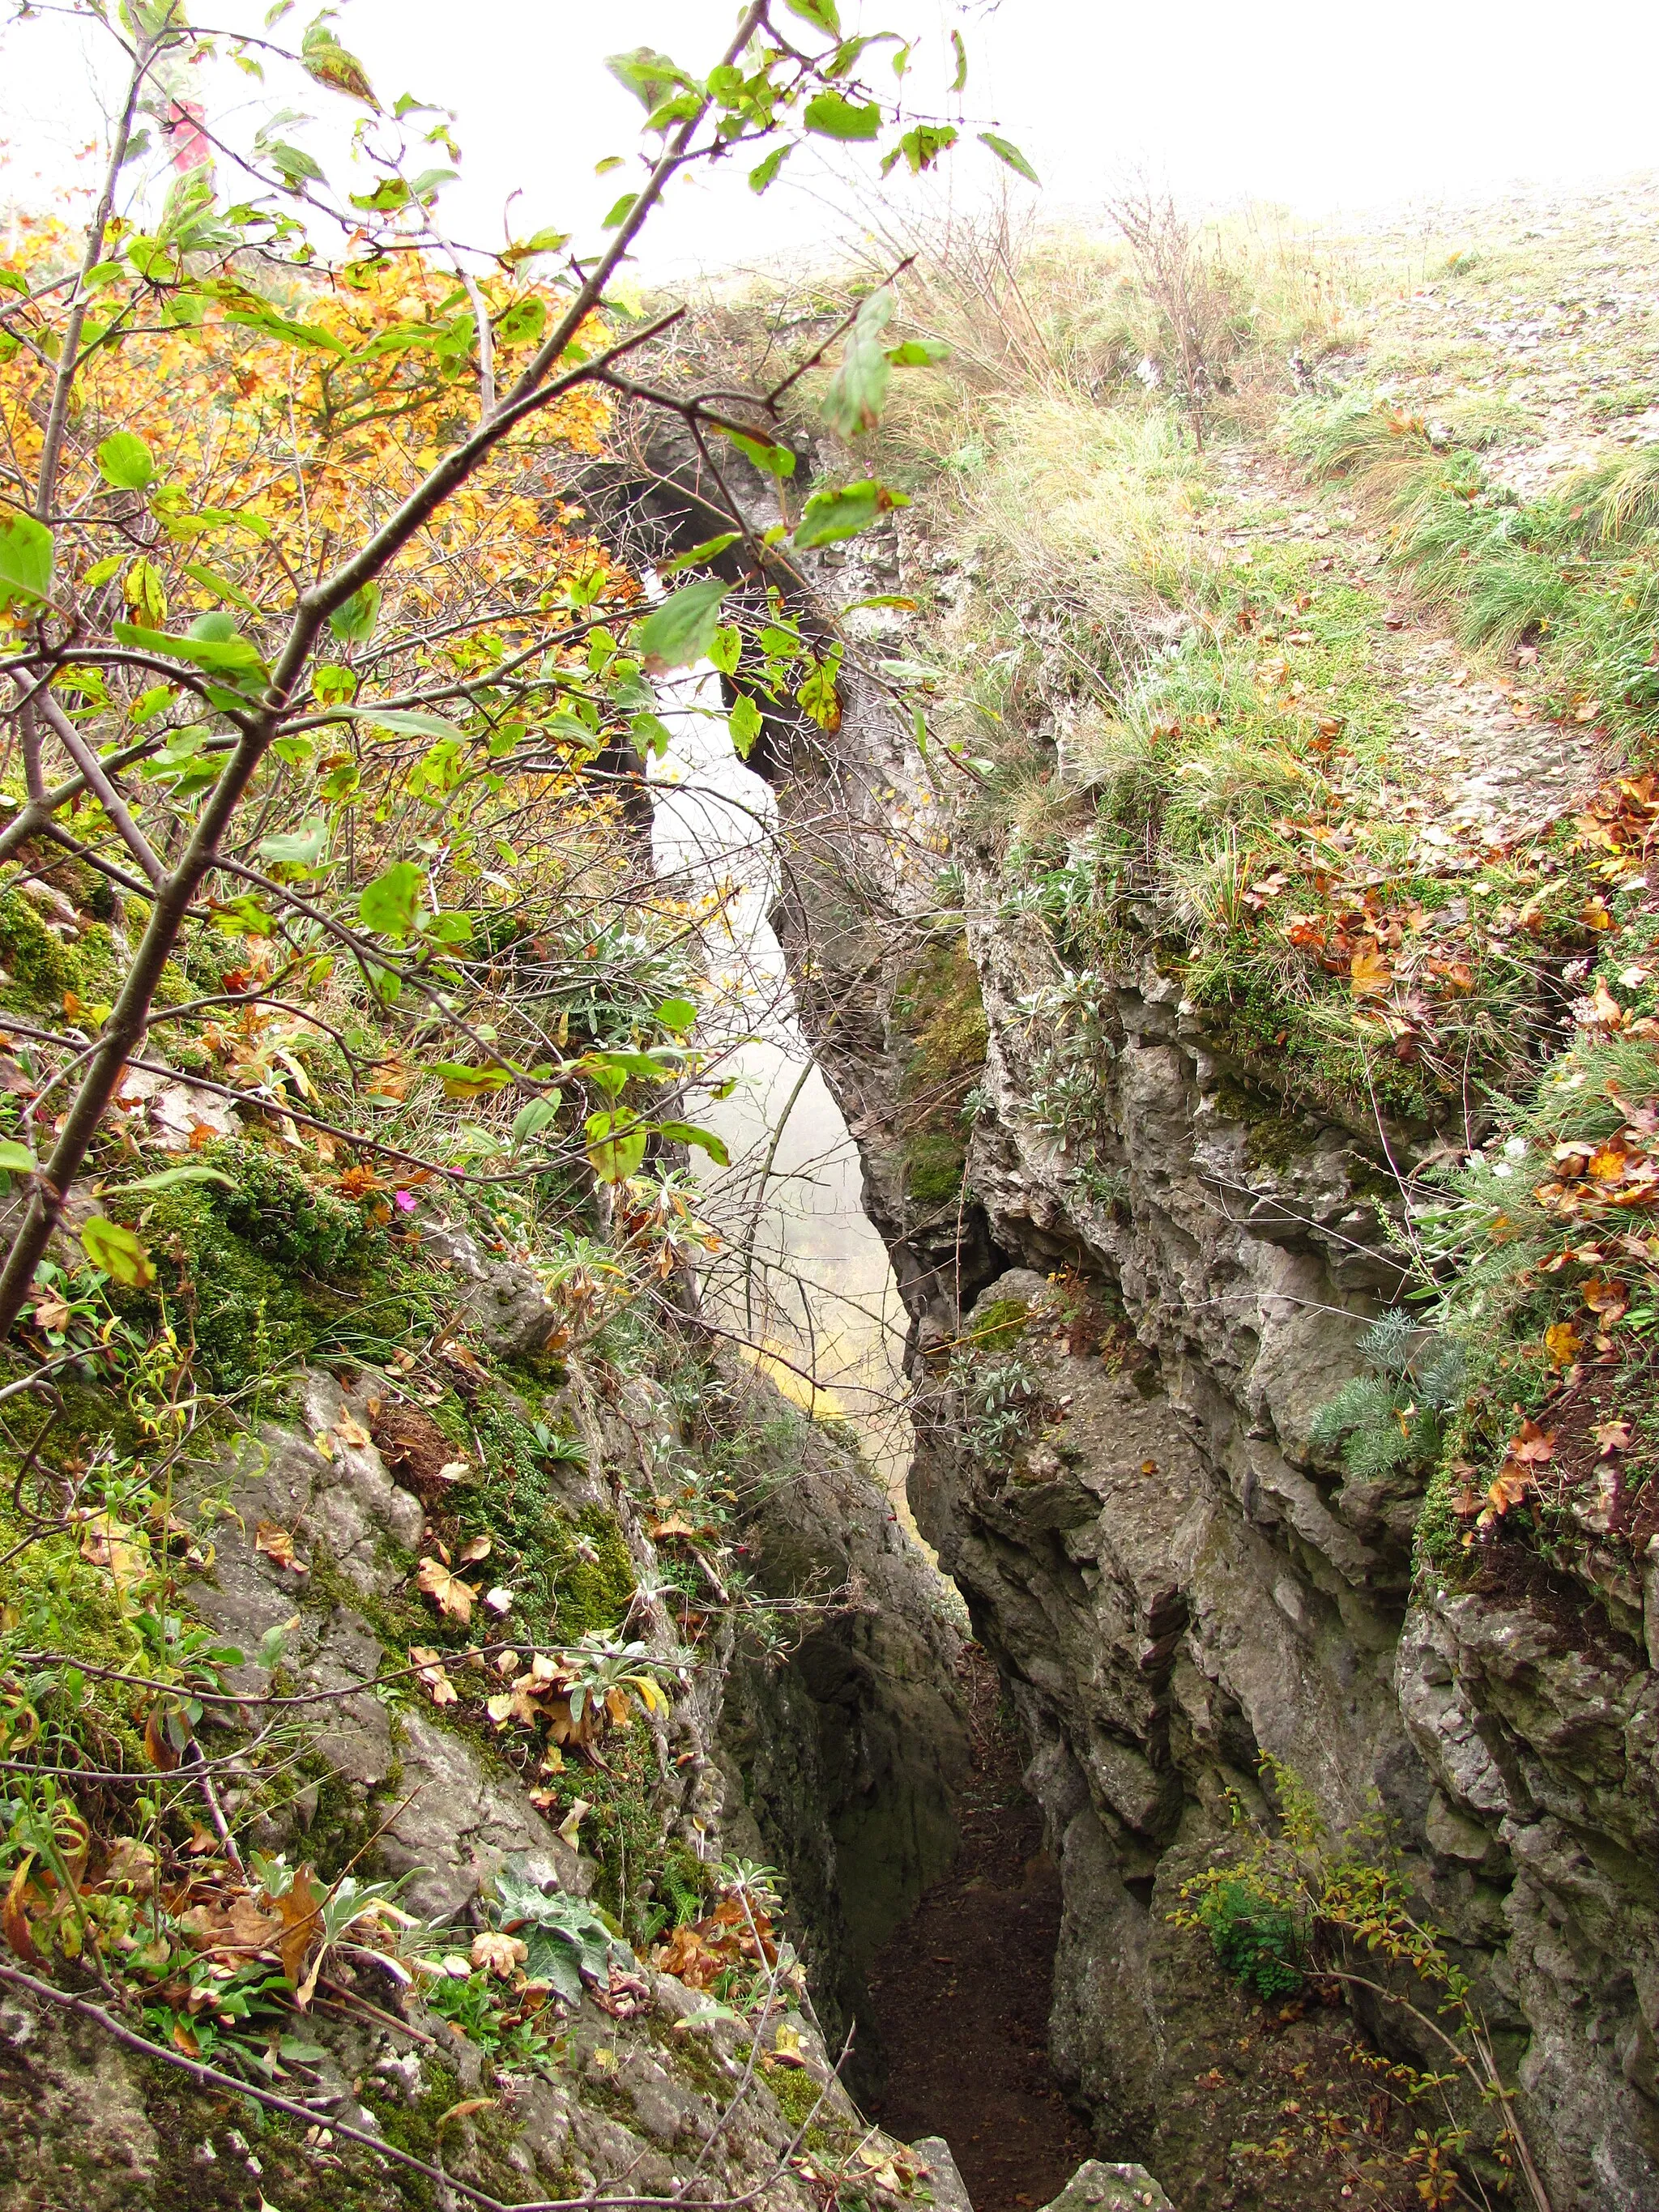 Photo showing: Kotyz_Jelinek`s Bridge, national natural monument Kotýz in Beround District, Czech Republic